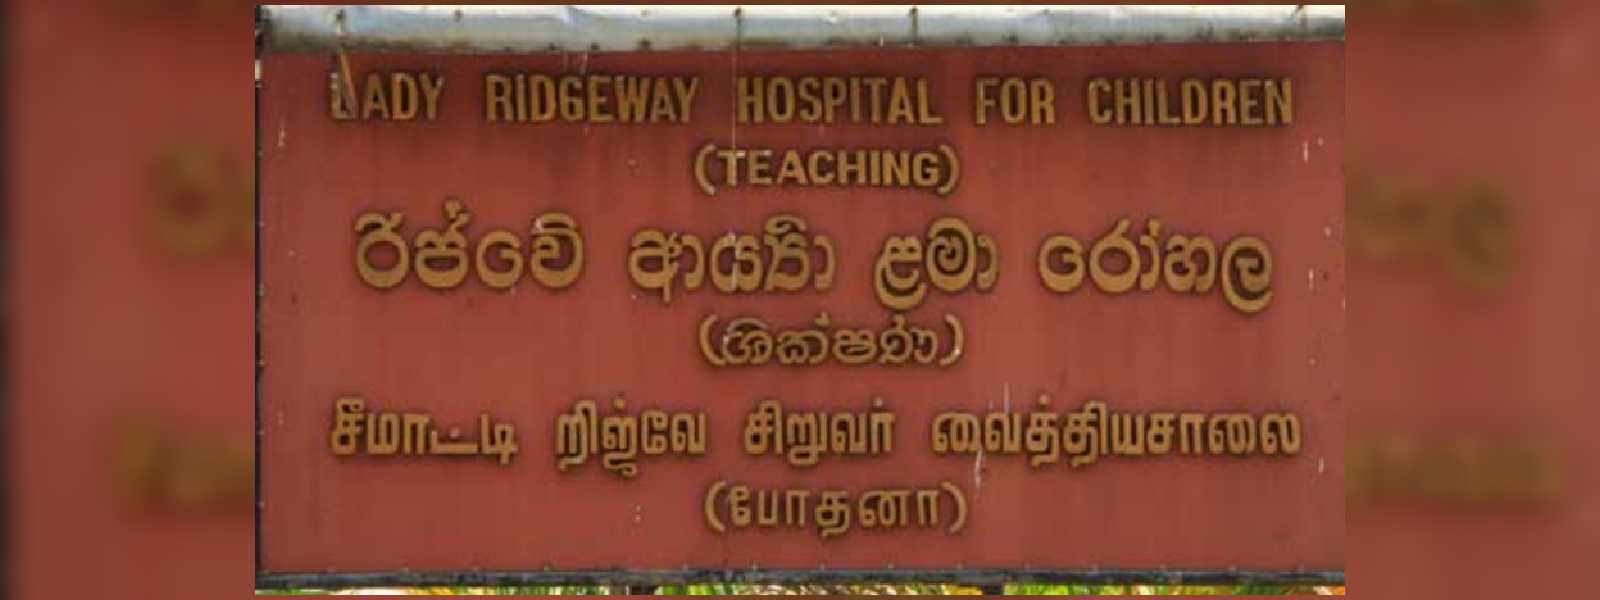 Lady Ridgeway COVID-19 ward oversaturated: Dr. Wijesuriya